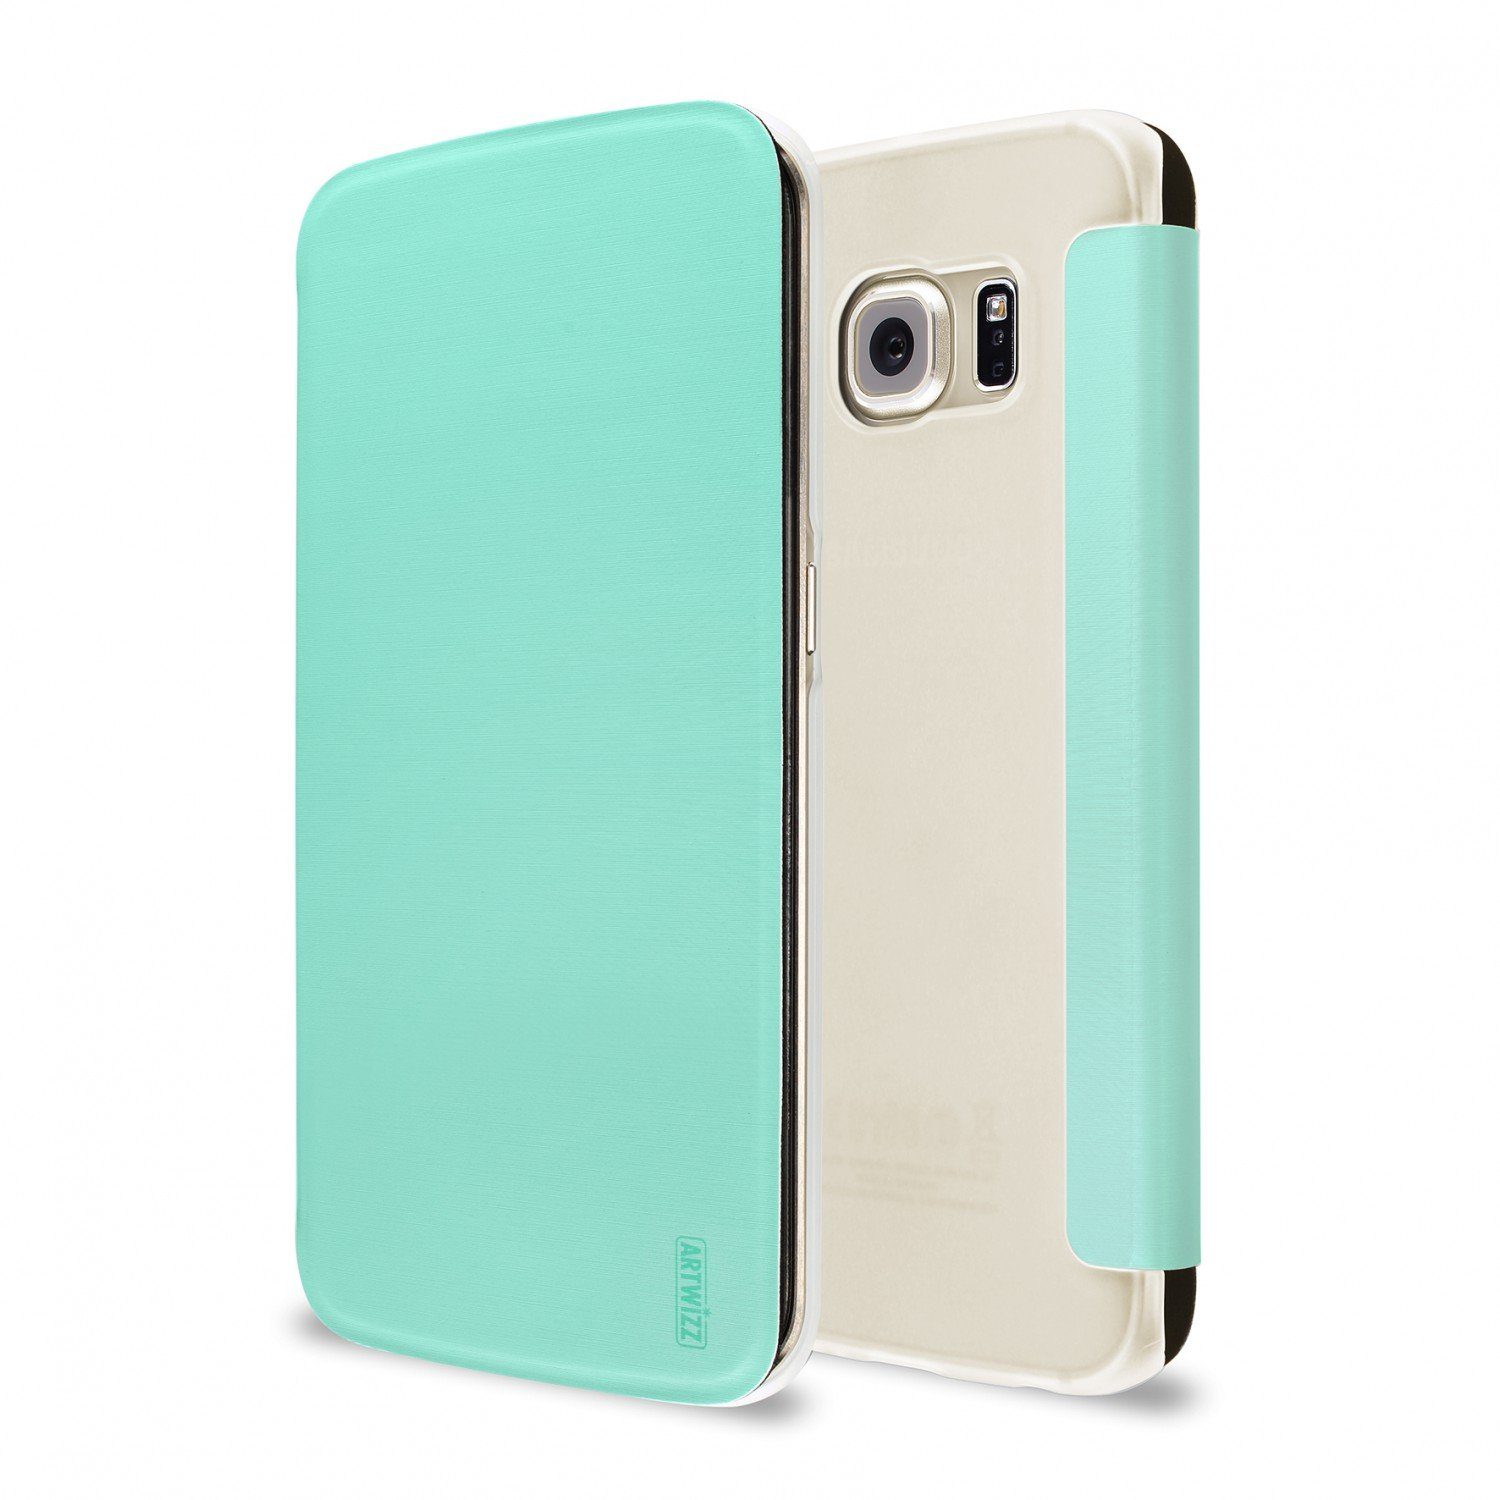 Artwizz Flip Case SmartJacket® for Samsung Galaxy S6 edge, mint